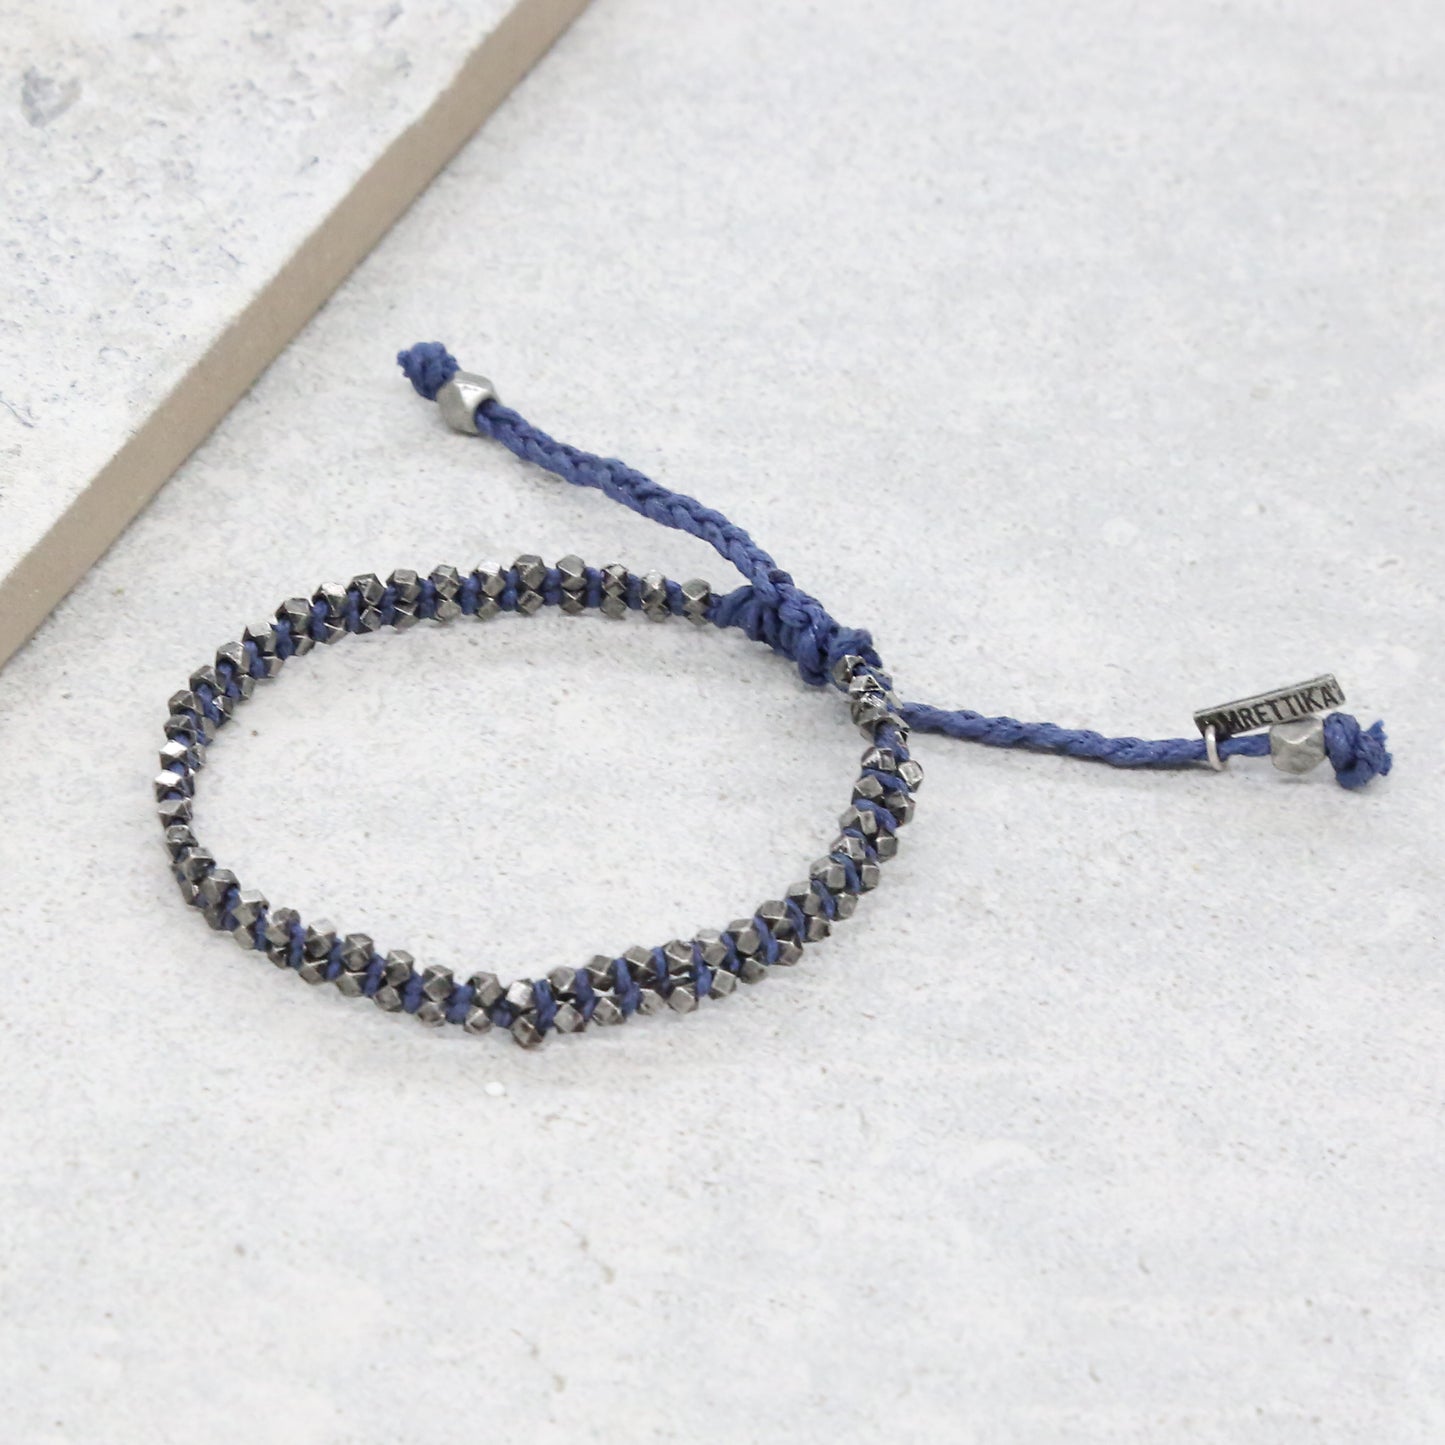 Salt Water Bracelet in Blue and Silver Ox